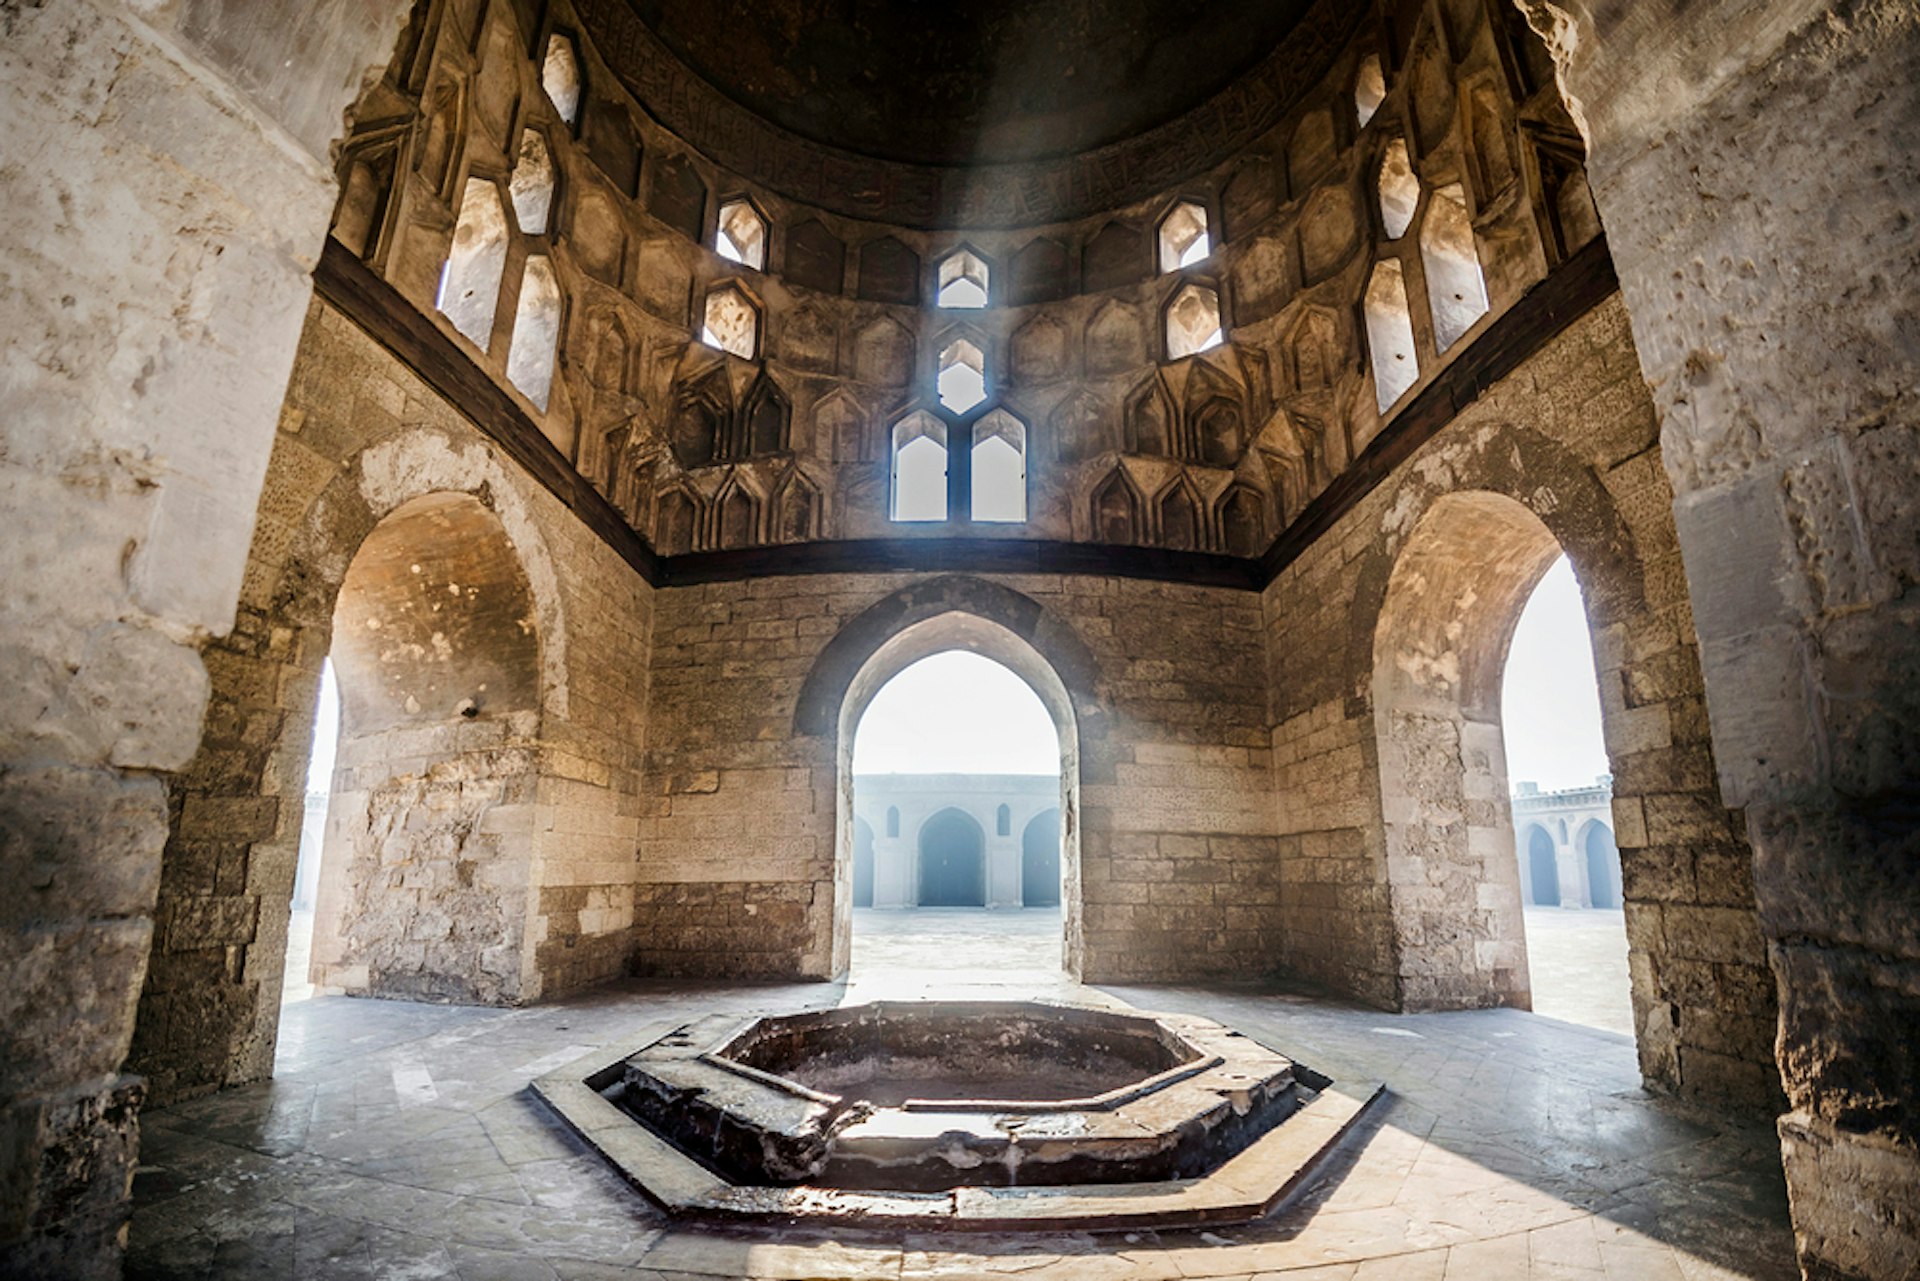 Light flows through windows into a hexagonal building within a mosque complex